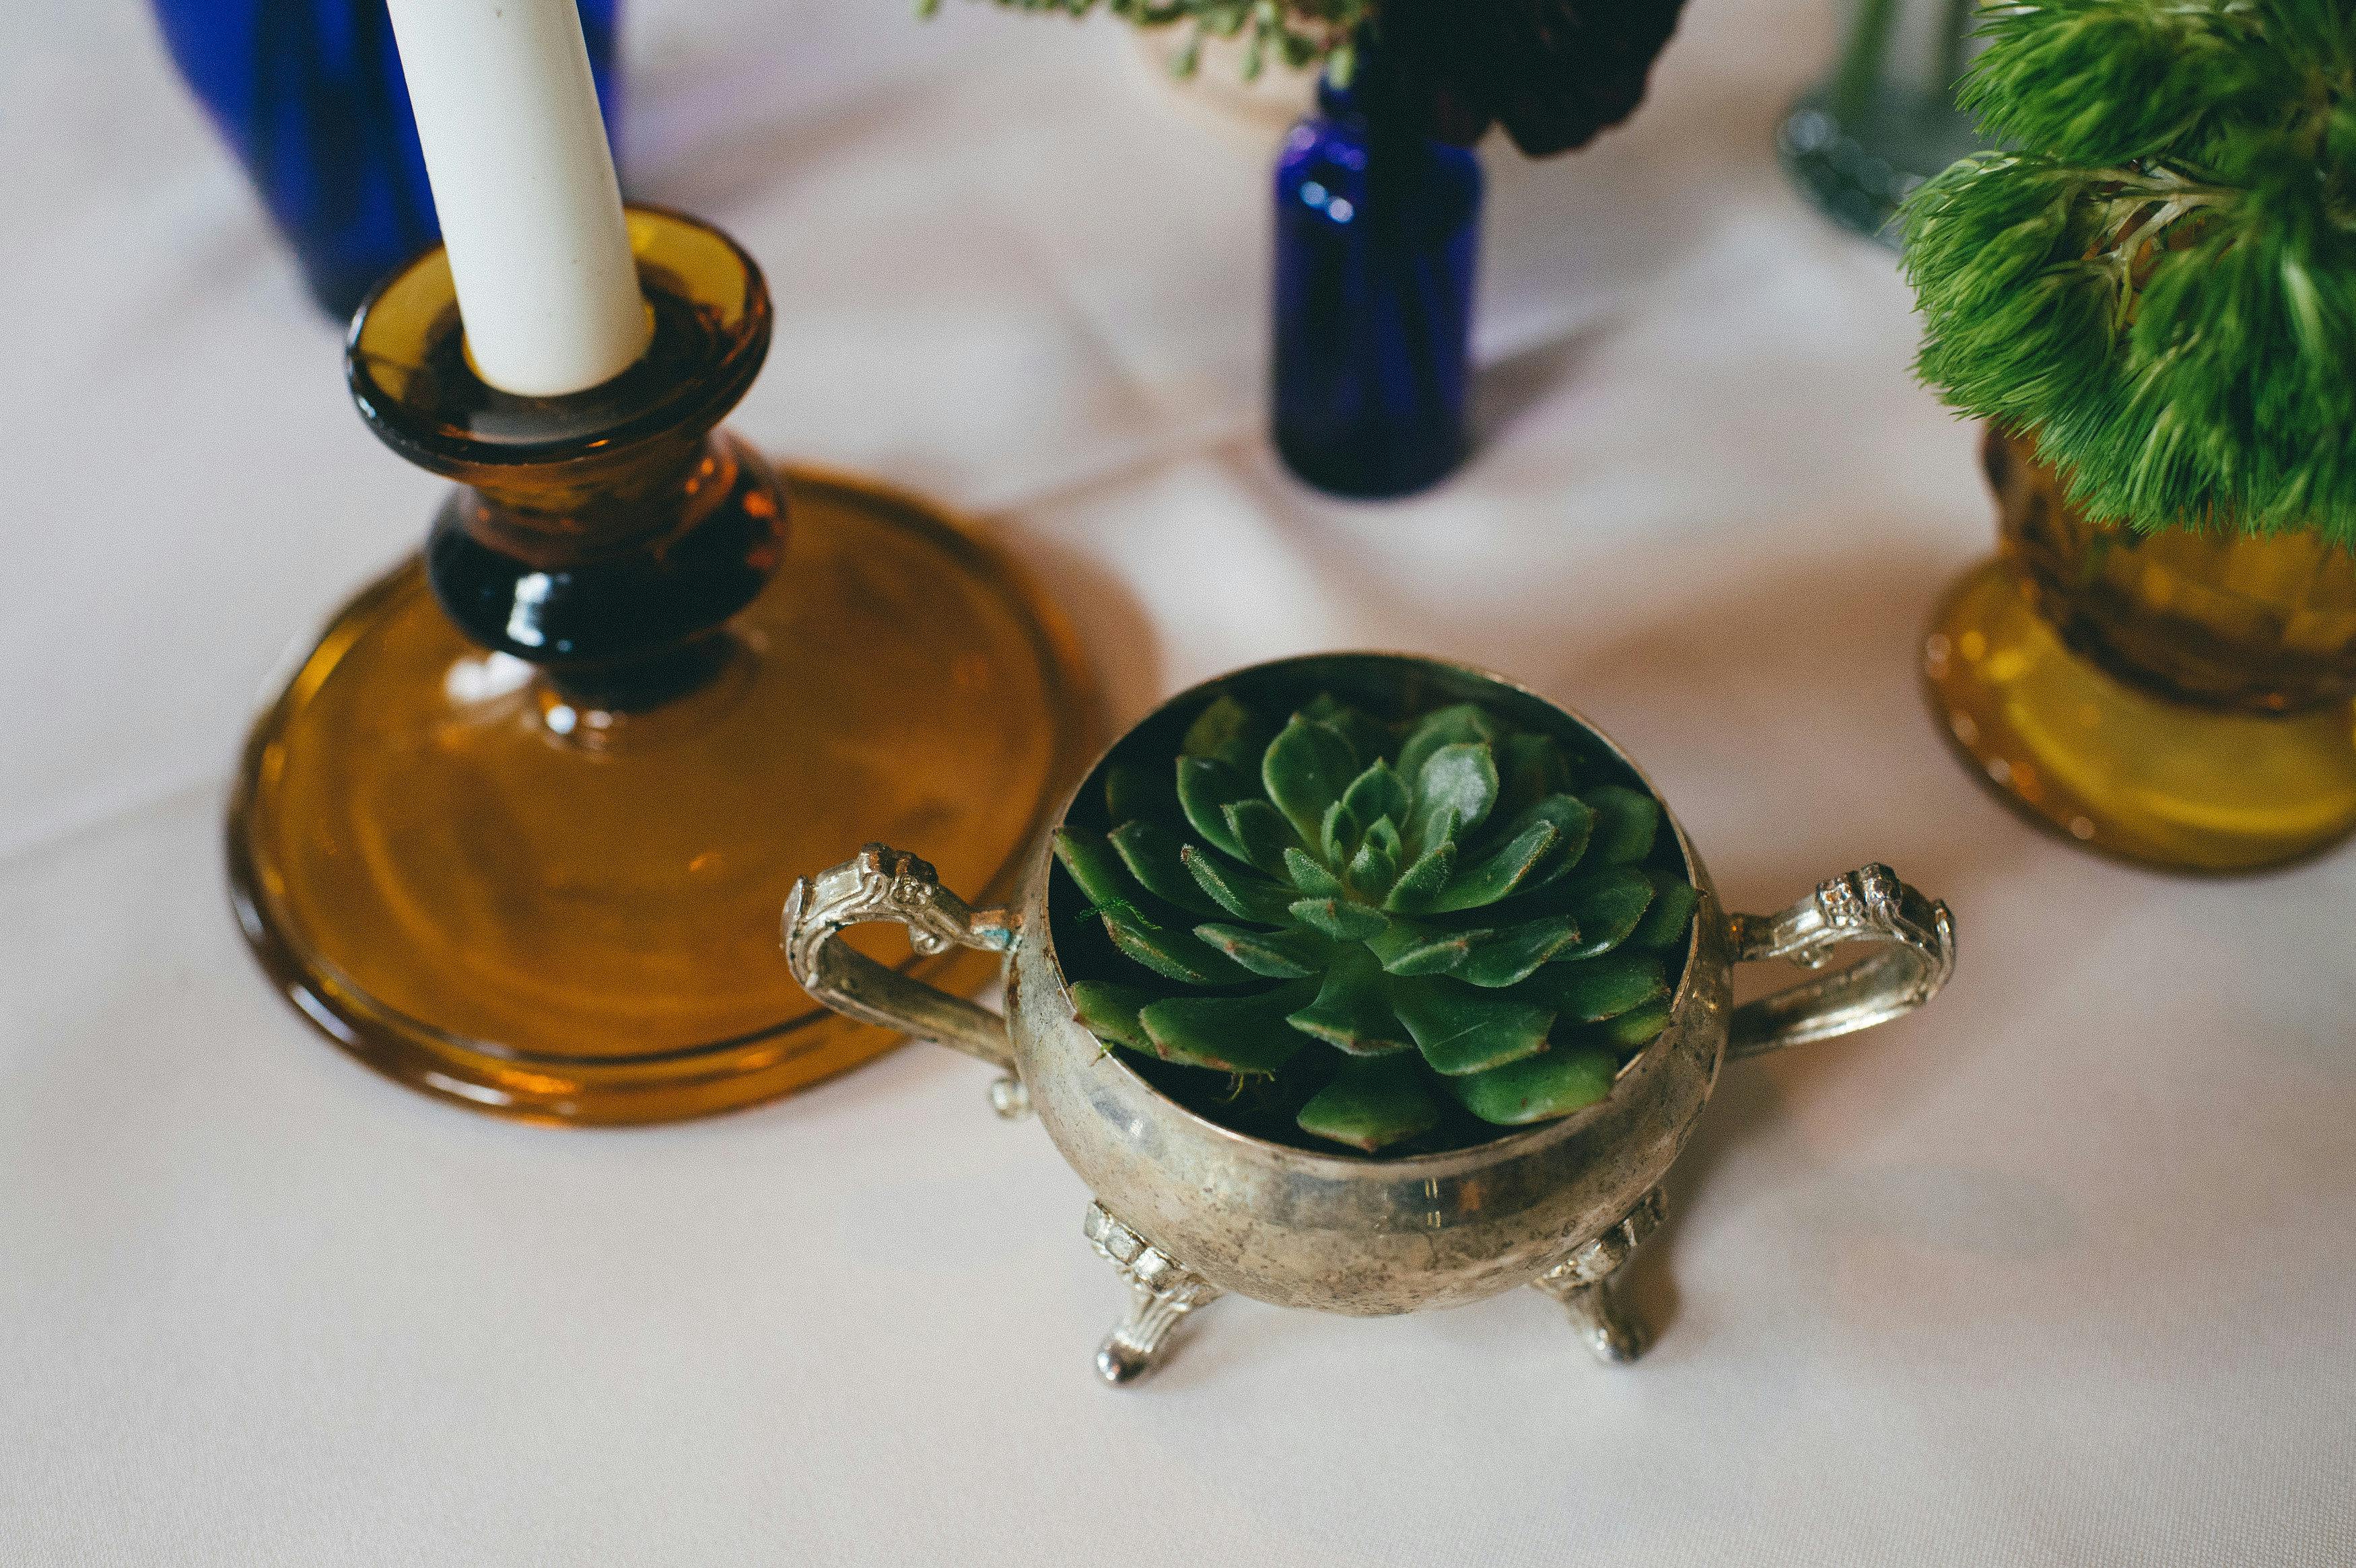 Succulent wedding centerpiece, blue vase ware, and golden candle stick holder.